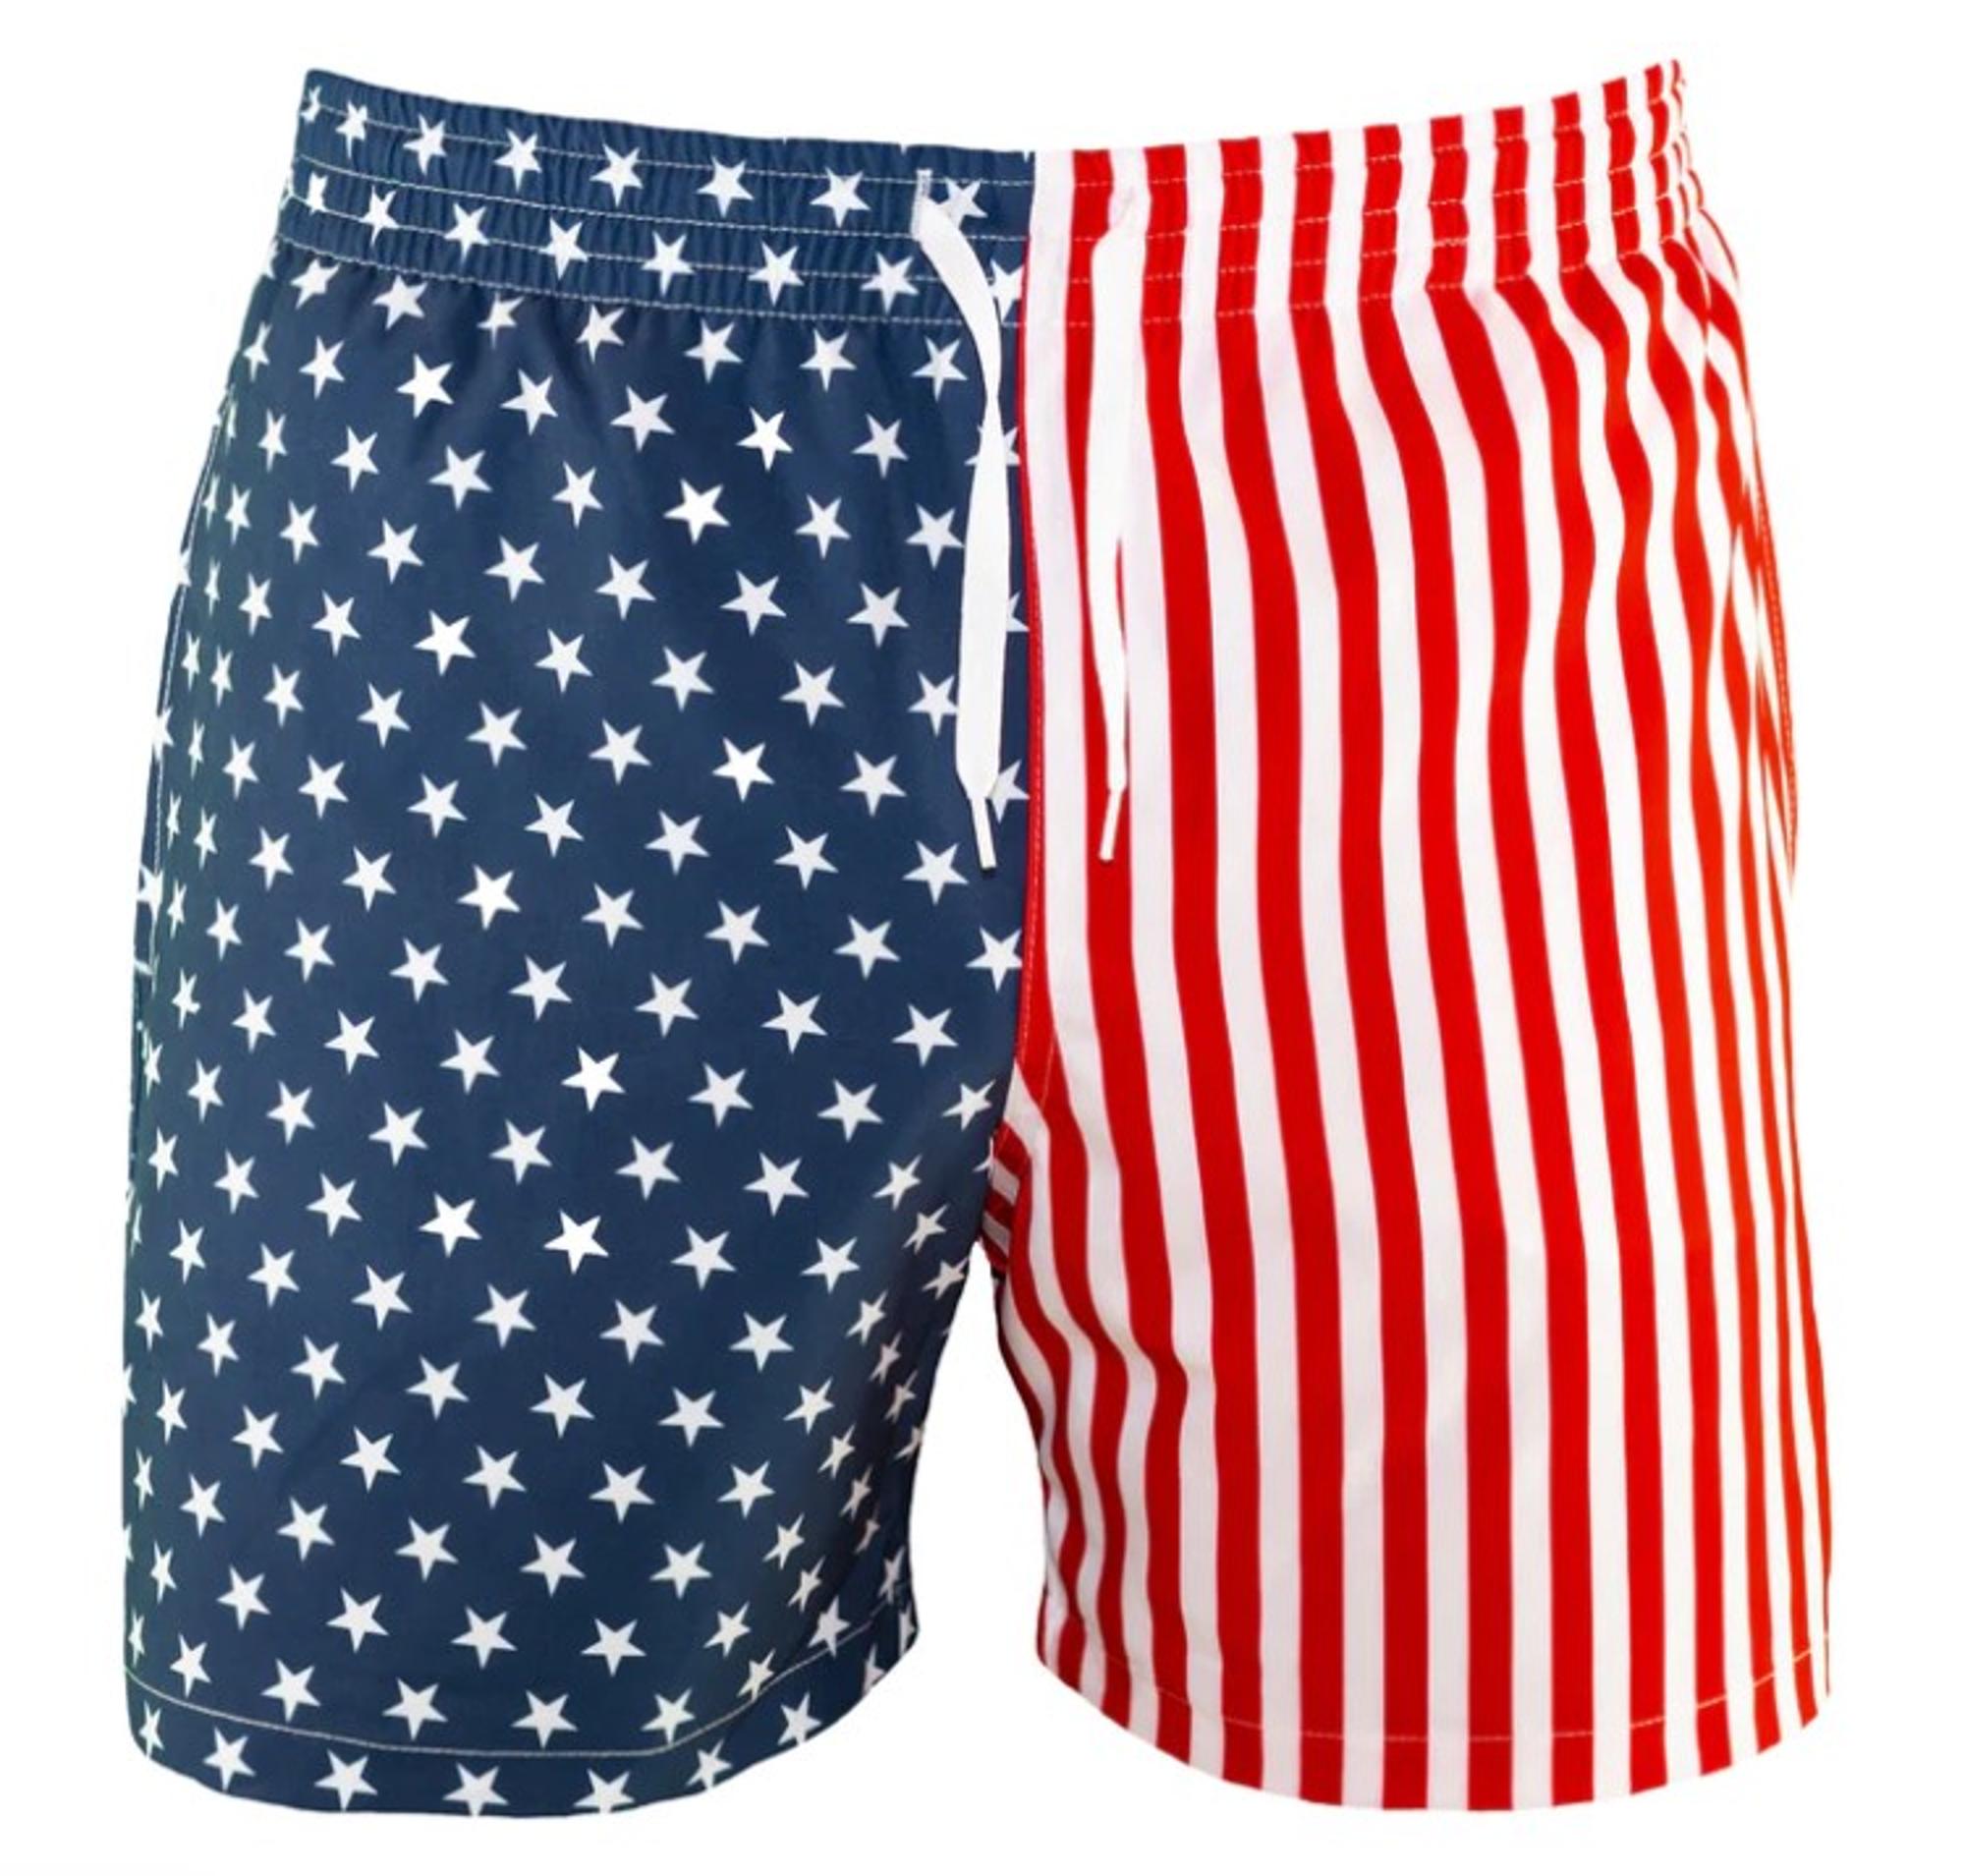 All American Swim Shorts